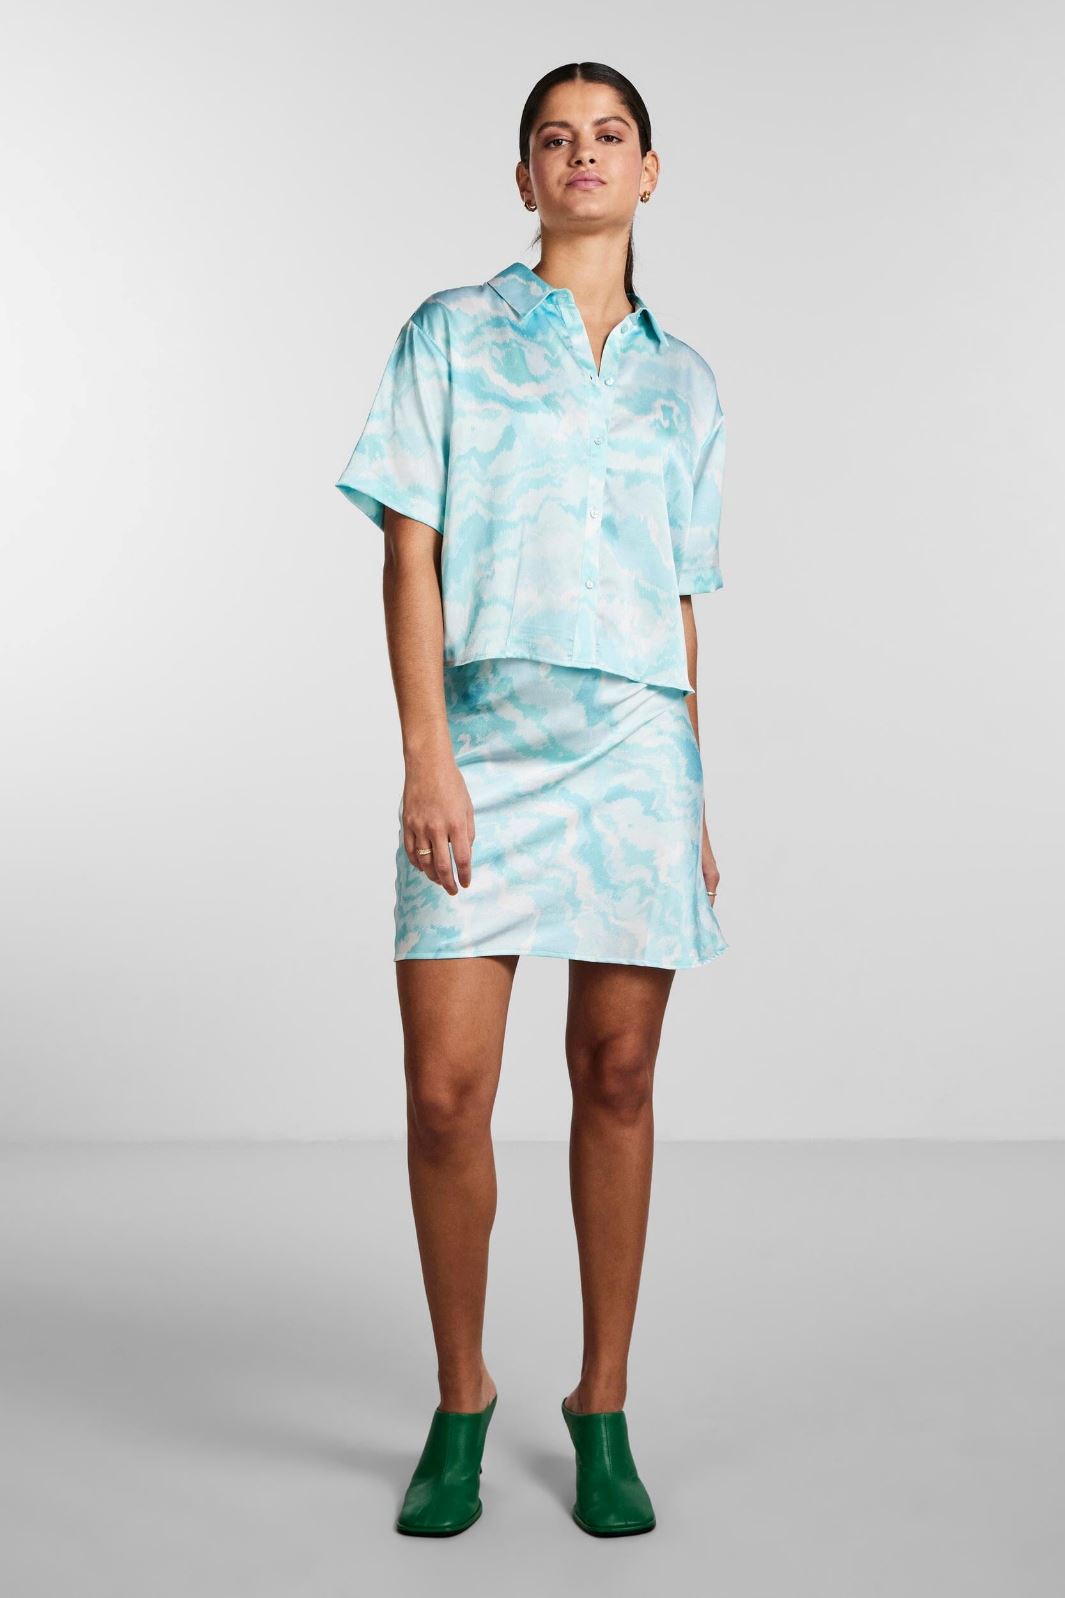 Pieces - Pckerra Ss Shirt - Blue Atoll Graphic Skjorter 